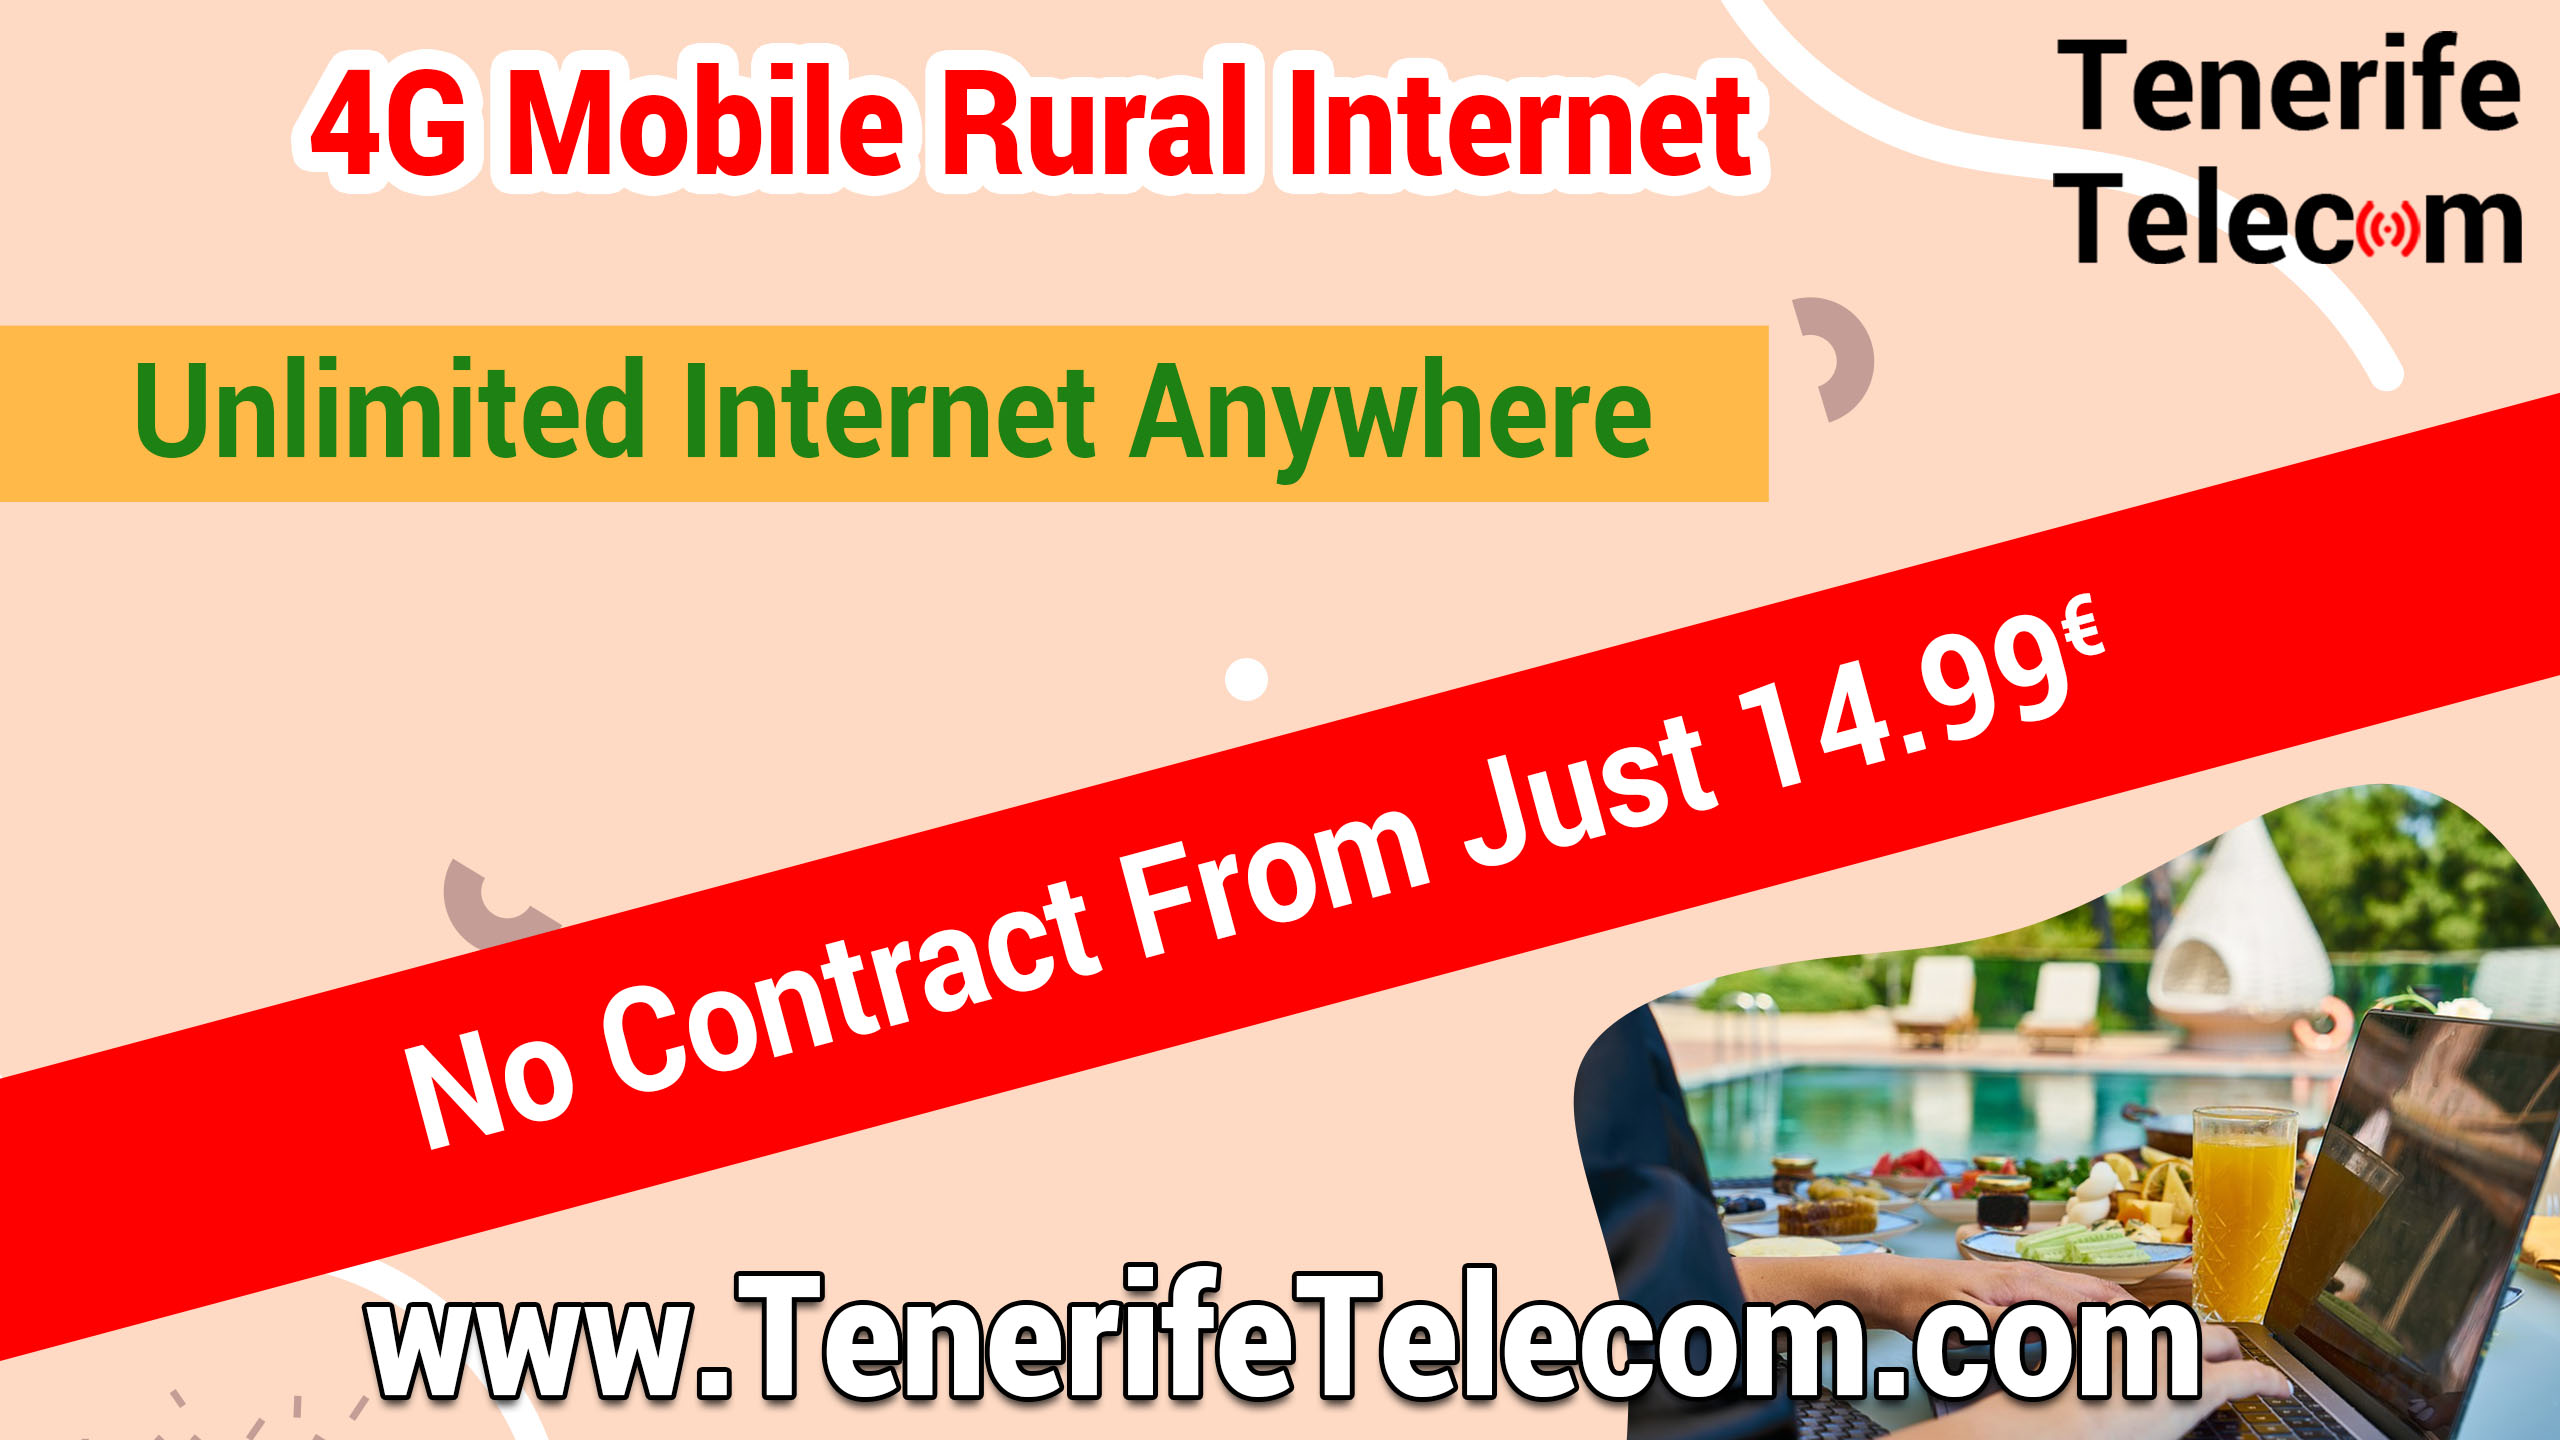 4G Mobile Rural Internet from Tenerife telecom